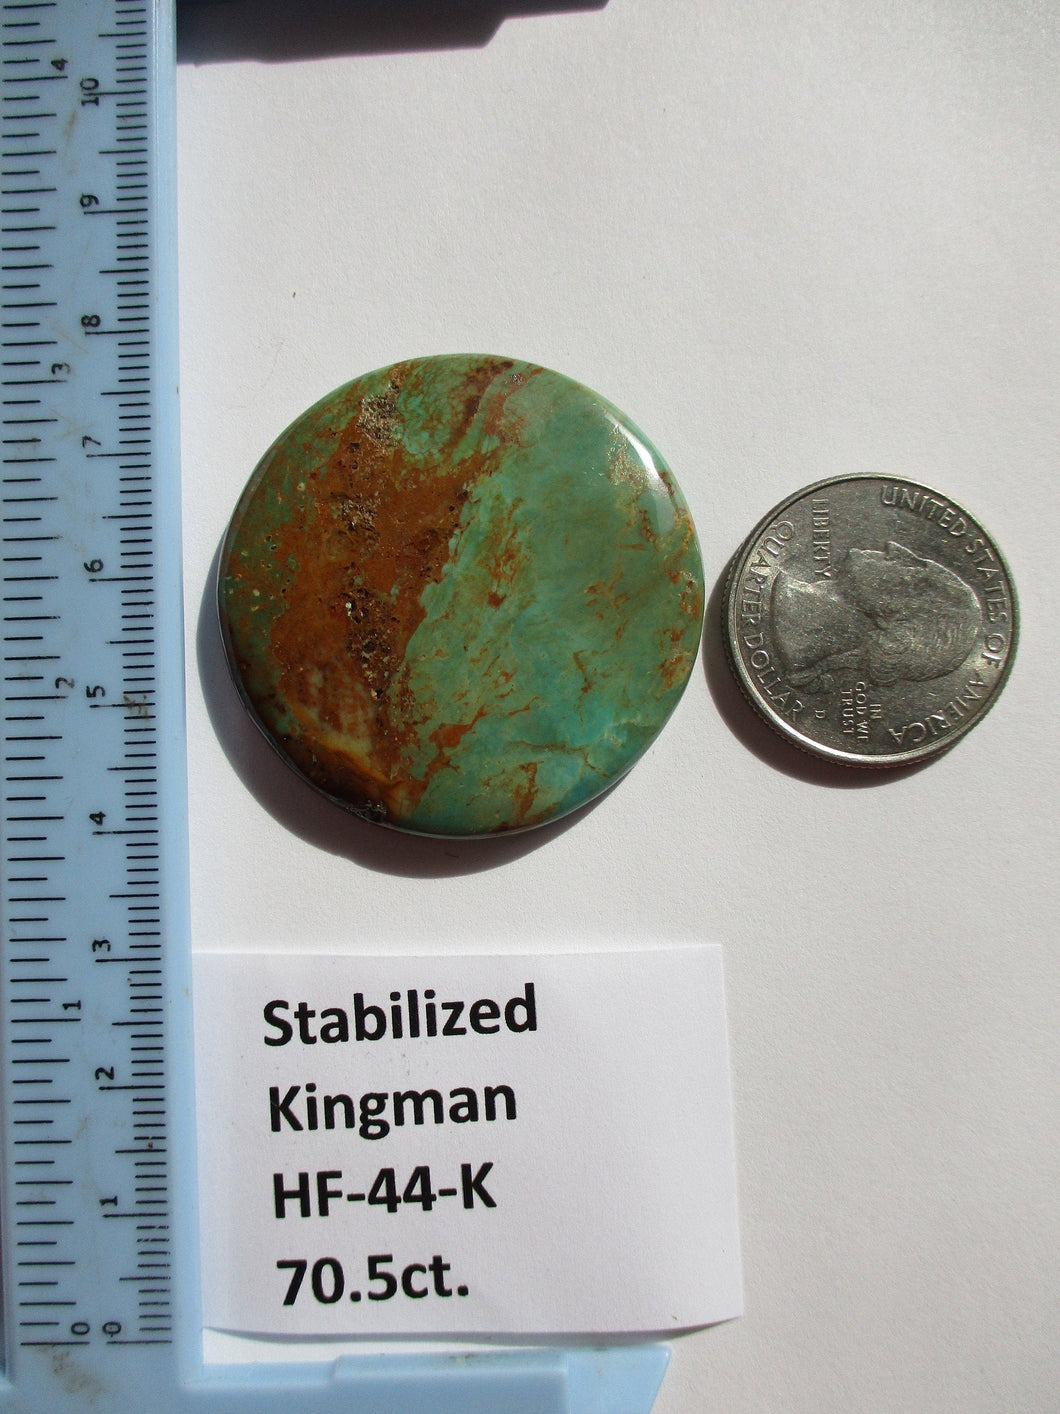 70.5 ct (40 round x 6 mm) Stabilized Kingman Turquoise Cabochon Gemstone, HF 44